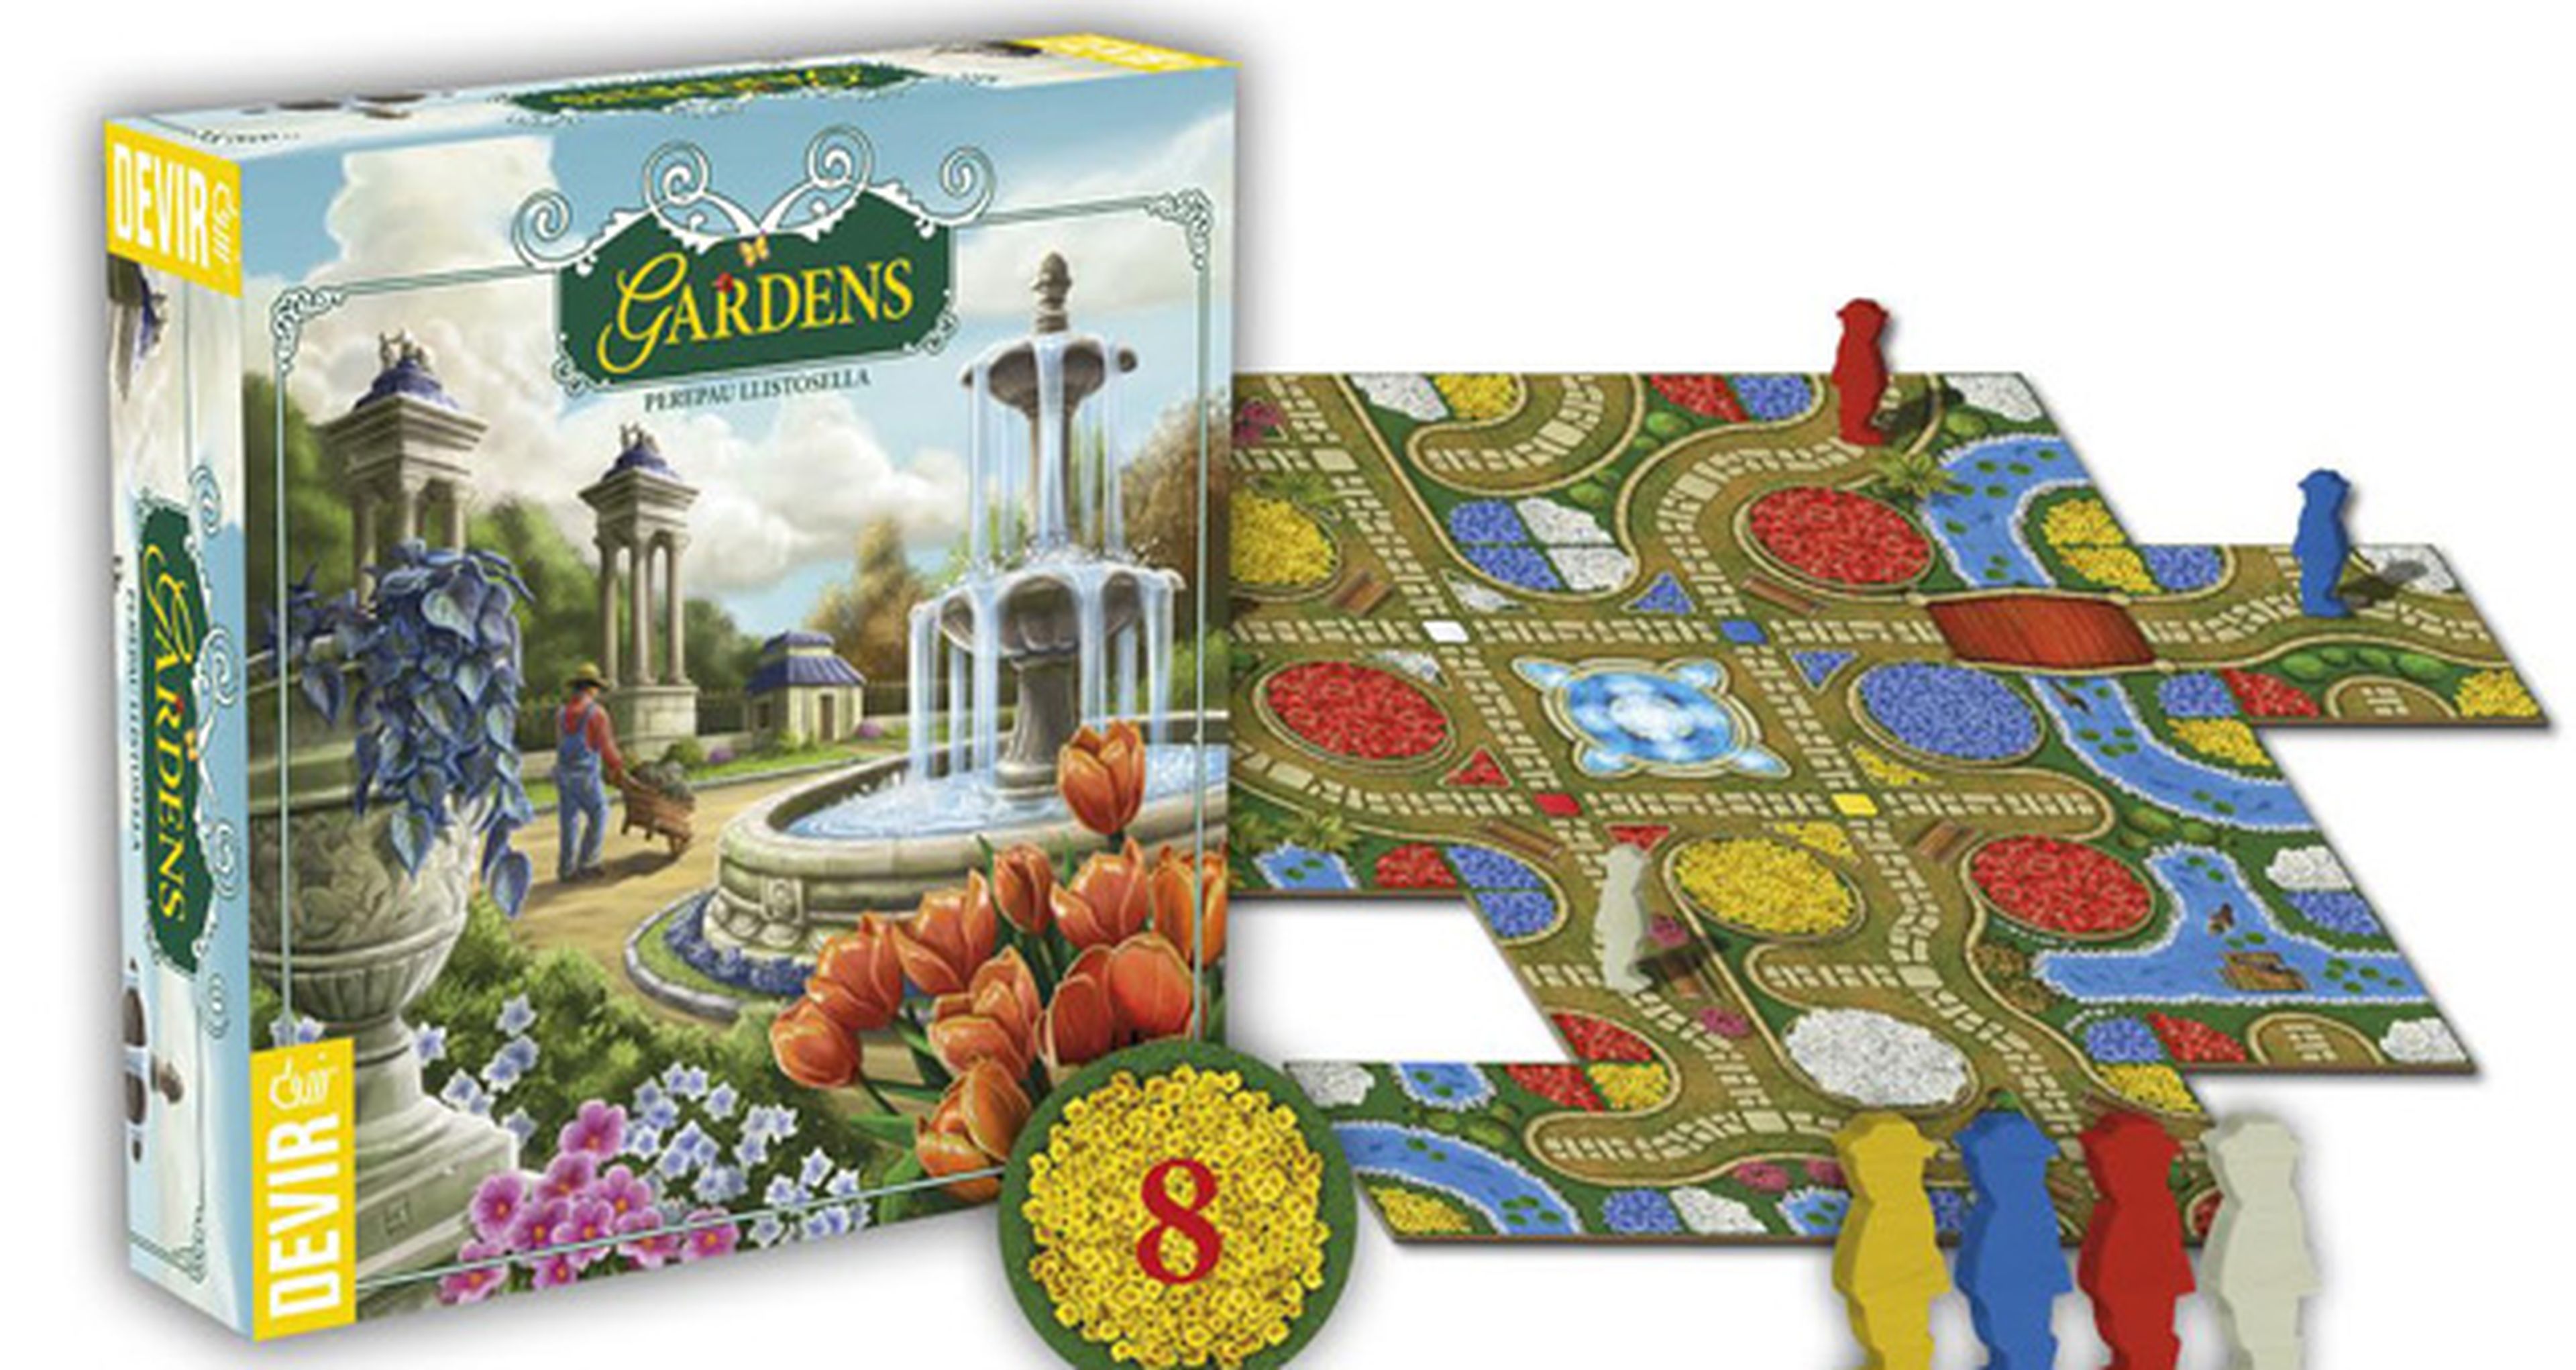 Gardens, el juego mesa &quot;florido&quot; de Devir